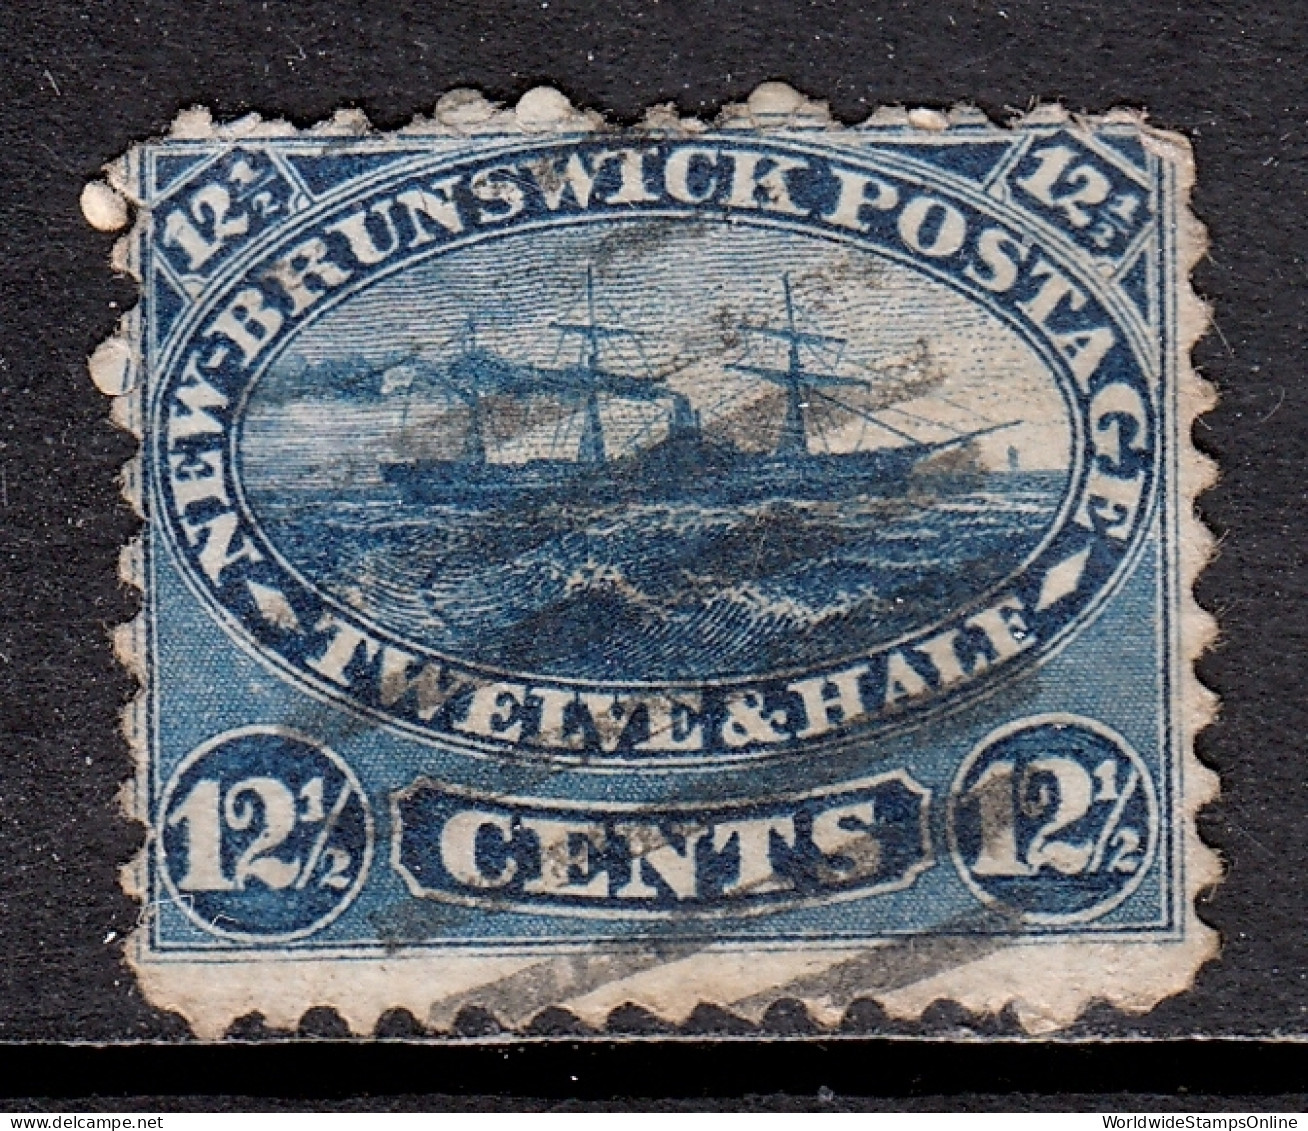 New Brunswick - Scott #10 - Used - See Description - SCV $77 - Used Stamps